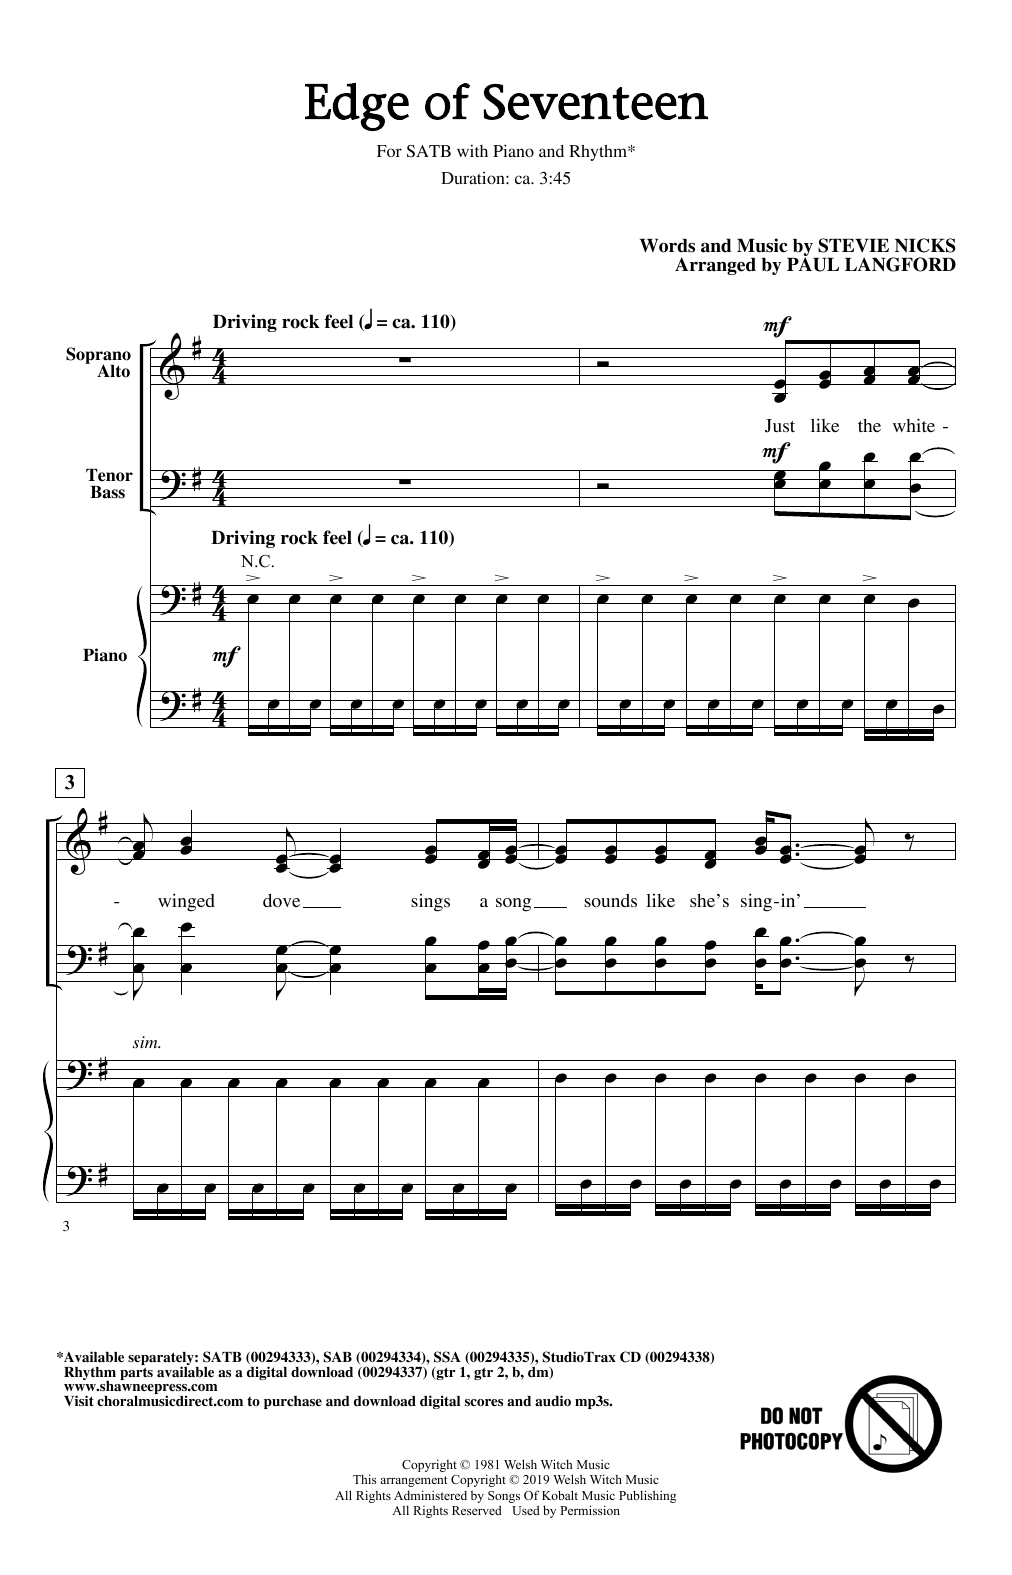 Stevie Nicks Edge Of Seventeen (arr. Paul Langford) Sheet Music Notes & Chords for SSA Choir - Download or Print PDF